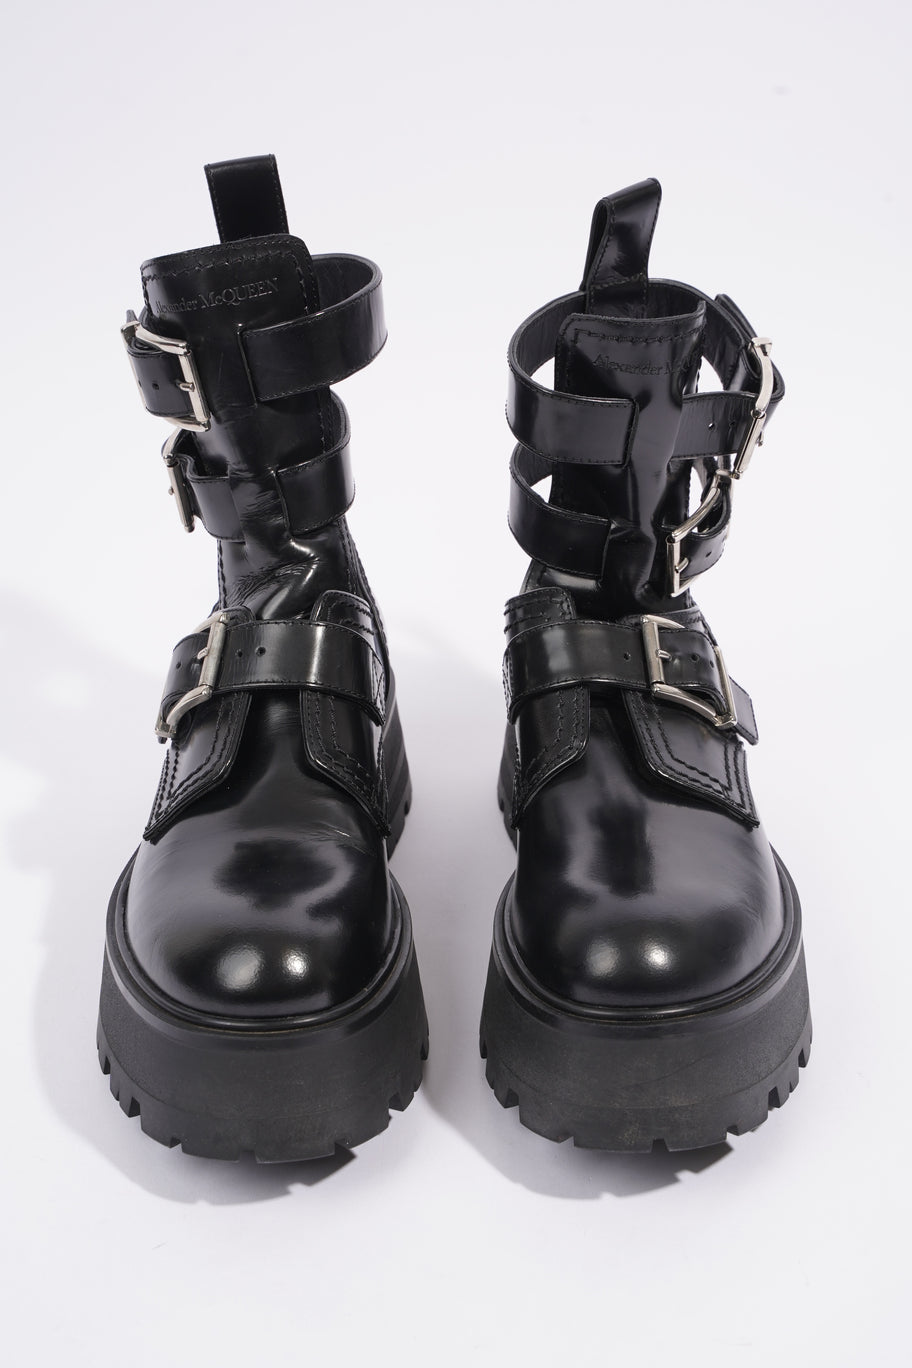 Rave Buckle Boot Black Leather EU 38 UK 5 Image 8